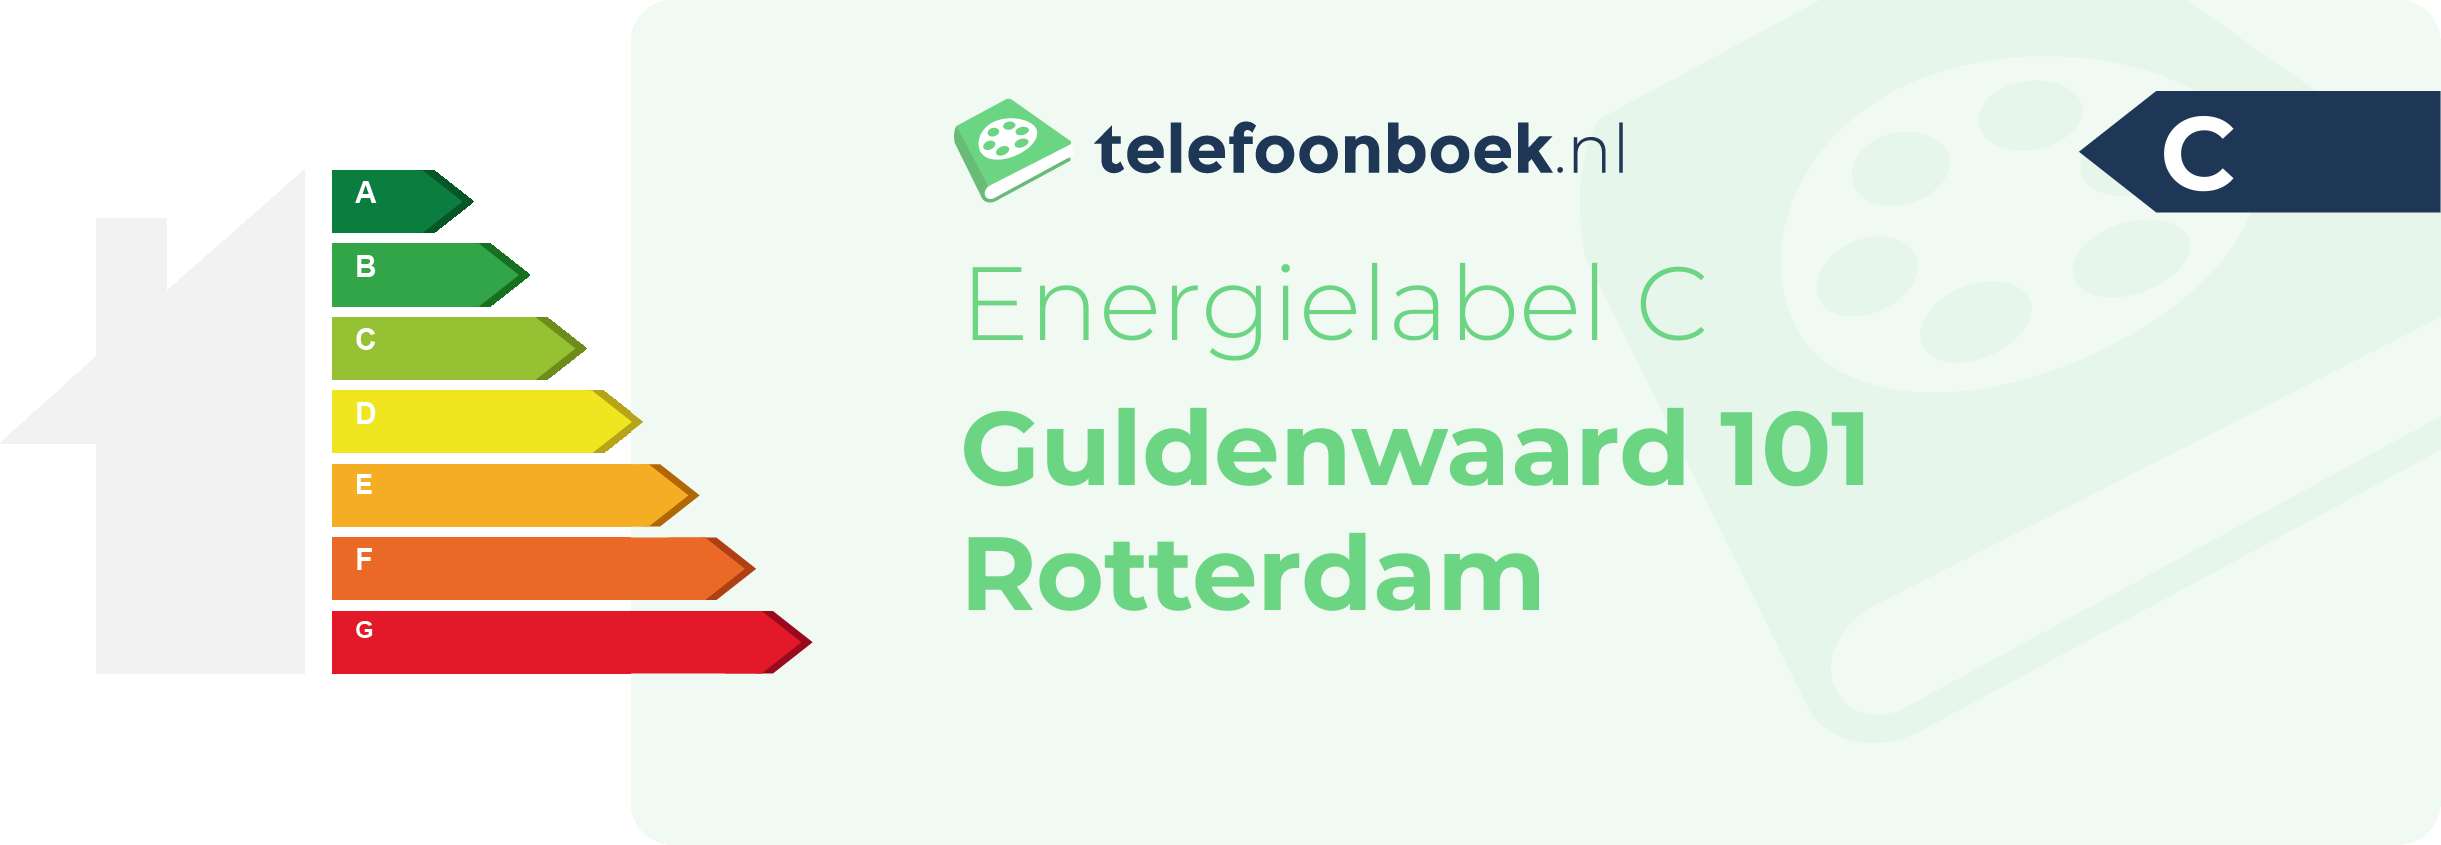 Energielabel Guldenwaard 101 Rotterdam